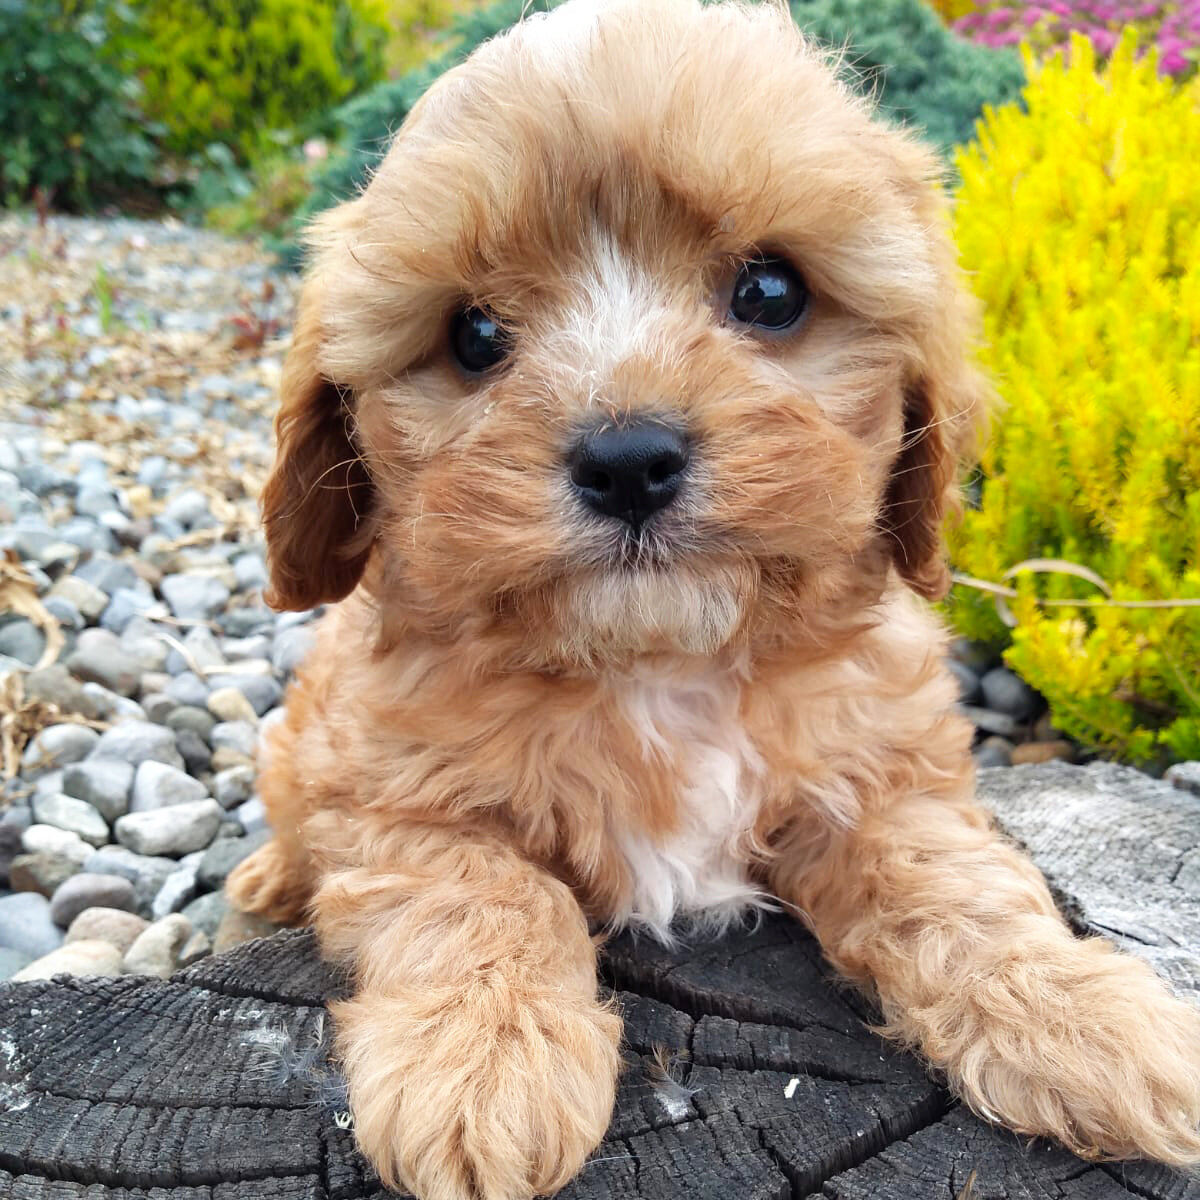 Rossbane Kennels Cavachon and Shichon Puppies - Cavachon puppies | Shichon  puppies for sale in Limerick, Ireland.